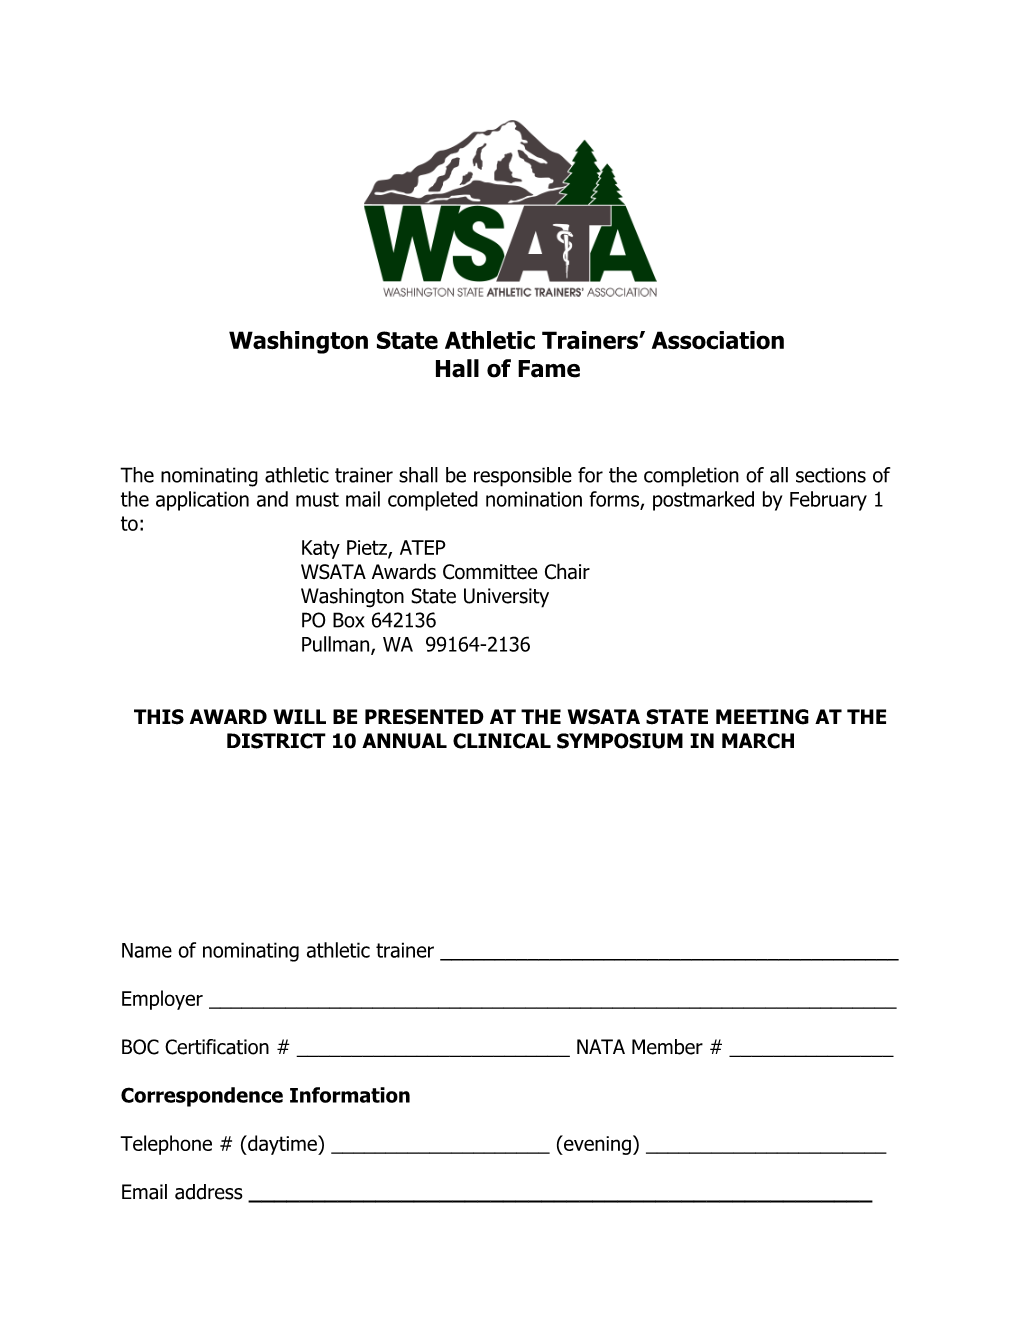 Washington State Athletic Trainers Association